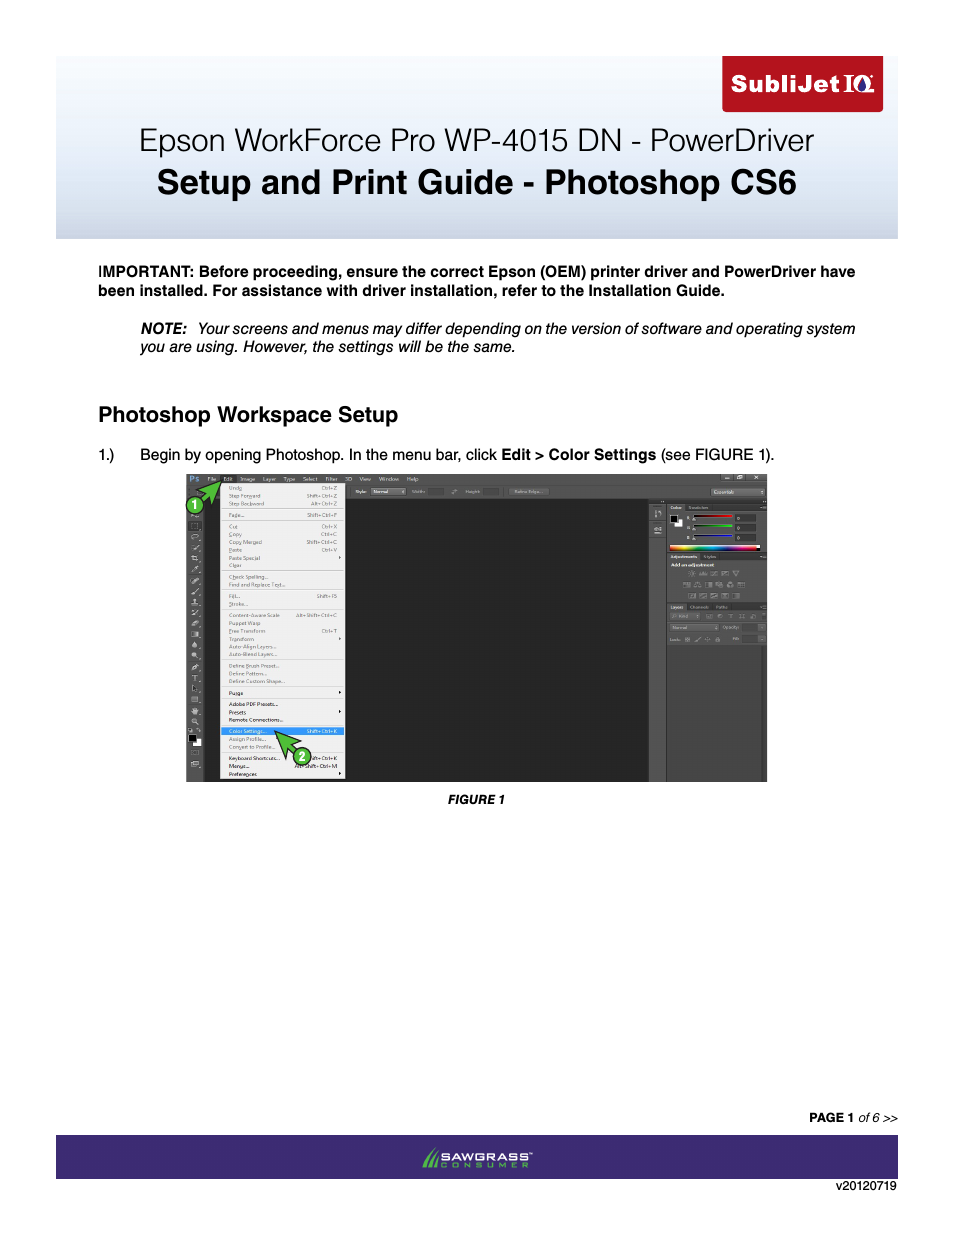 SubliJet IQ Epson WP-4015 (Power Driver Setup): Print & Setup Guide Adobe Photoshop CS6